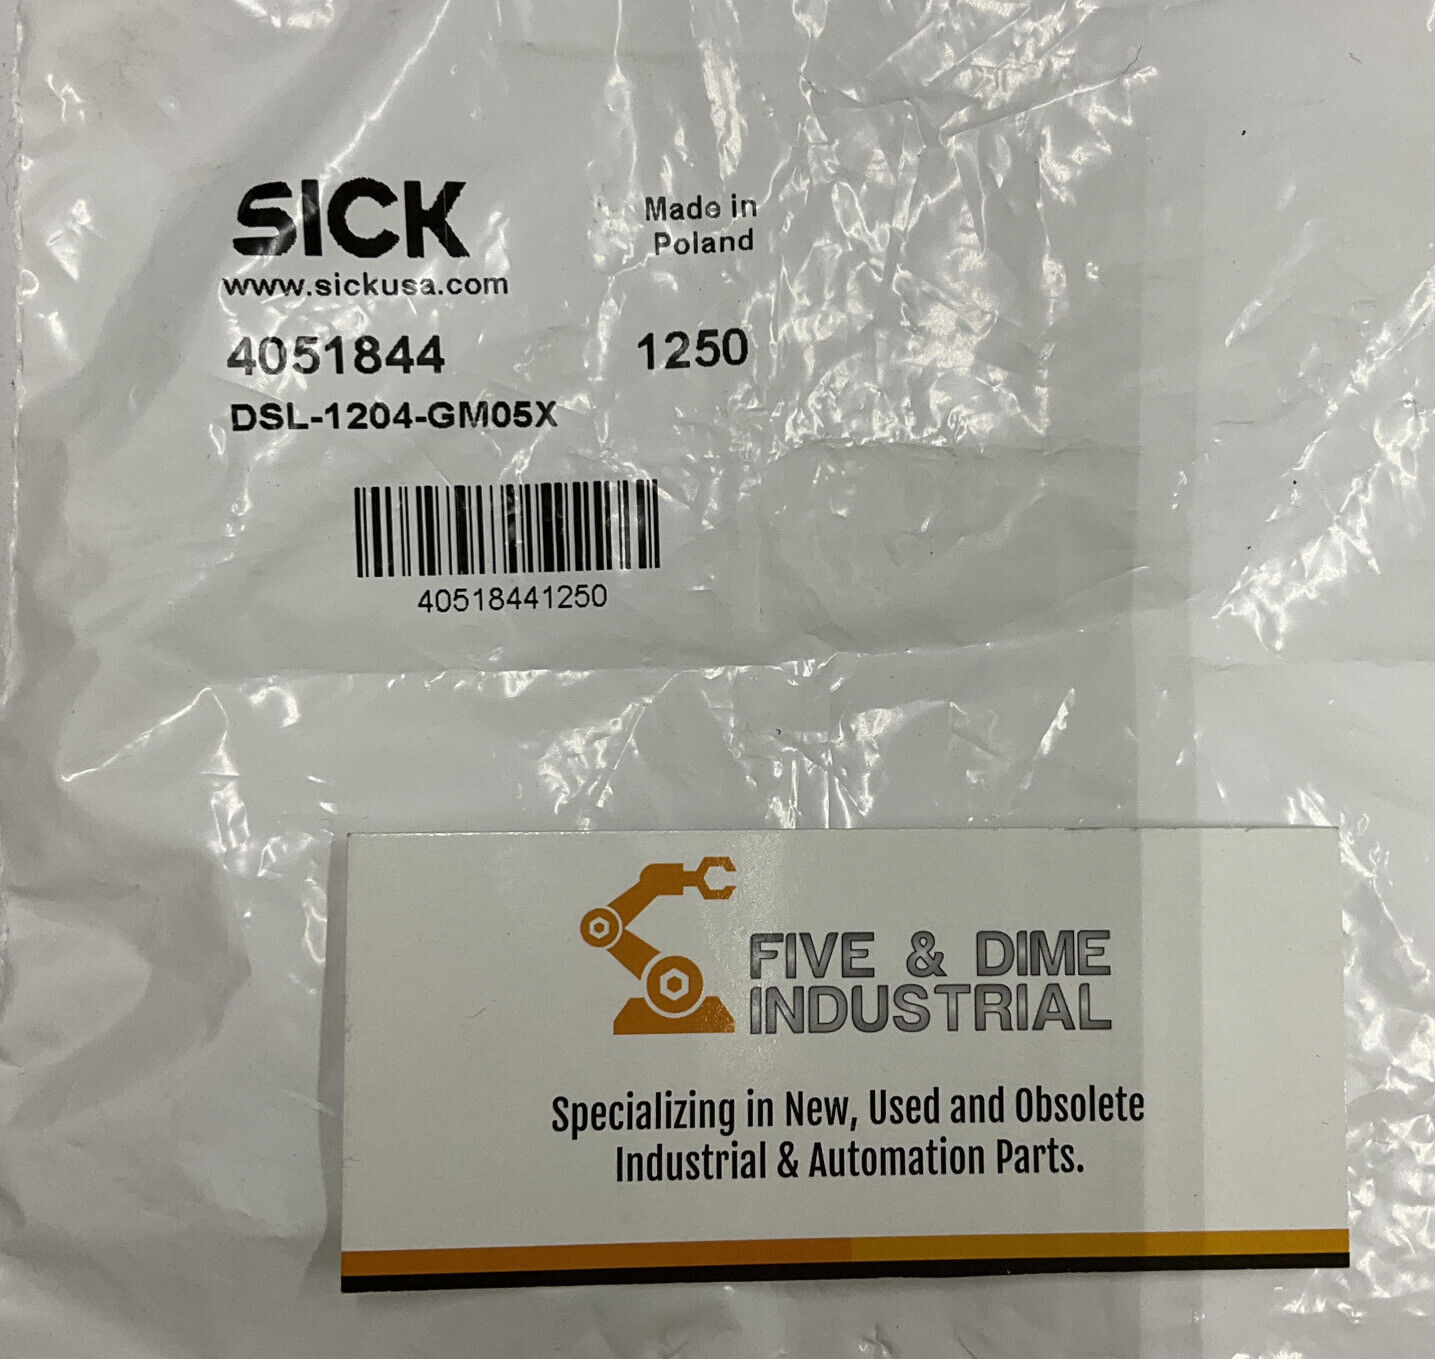 Sick 4051844 Dsl-1204-Gm05x Connector (RE103)